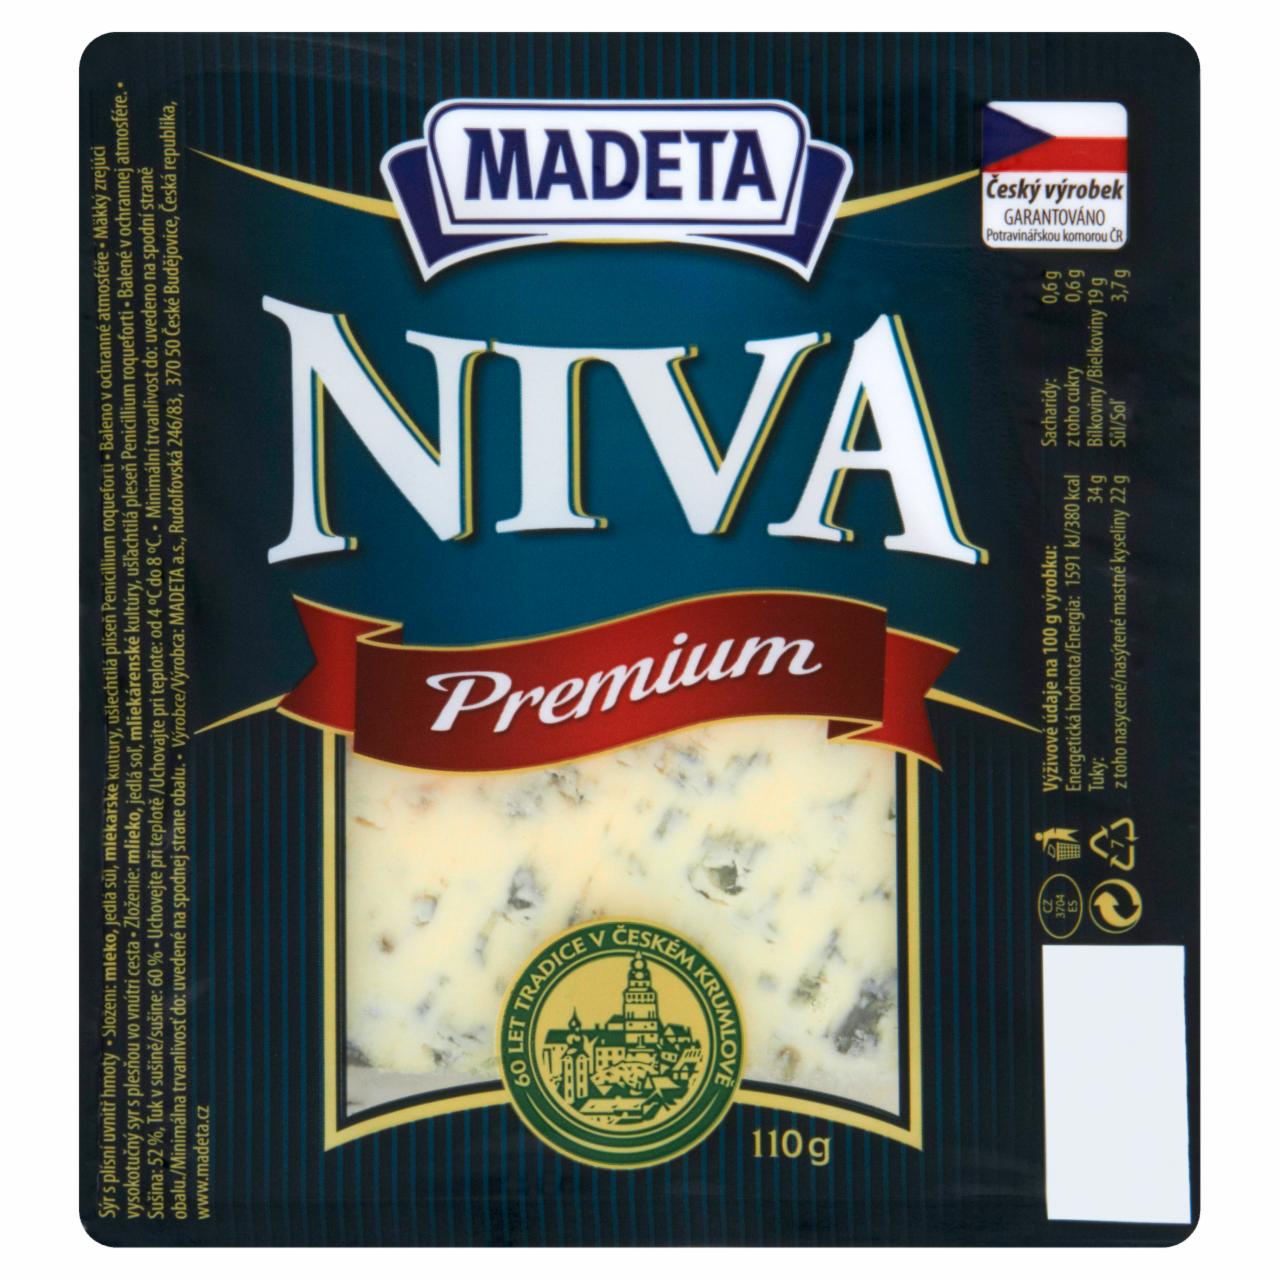 Zdjęcia - Madeta Niva Premium Ser pleśniowy 110 g